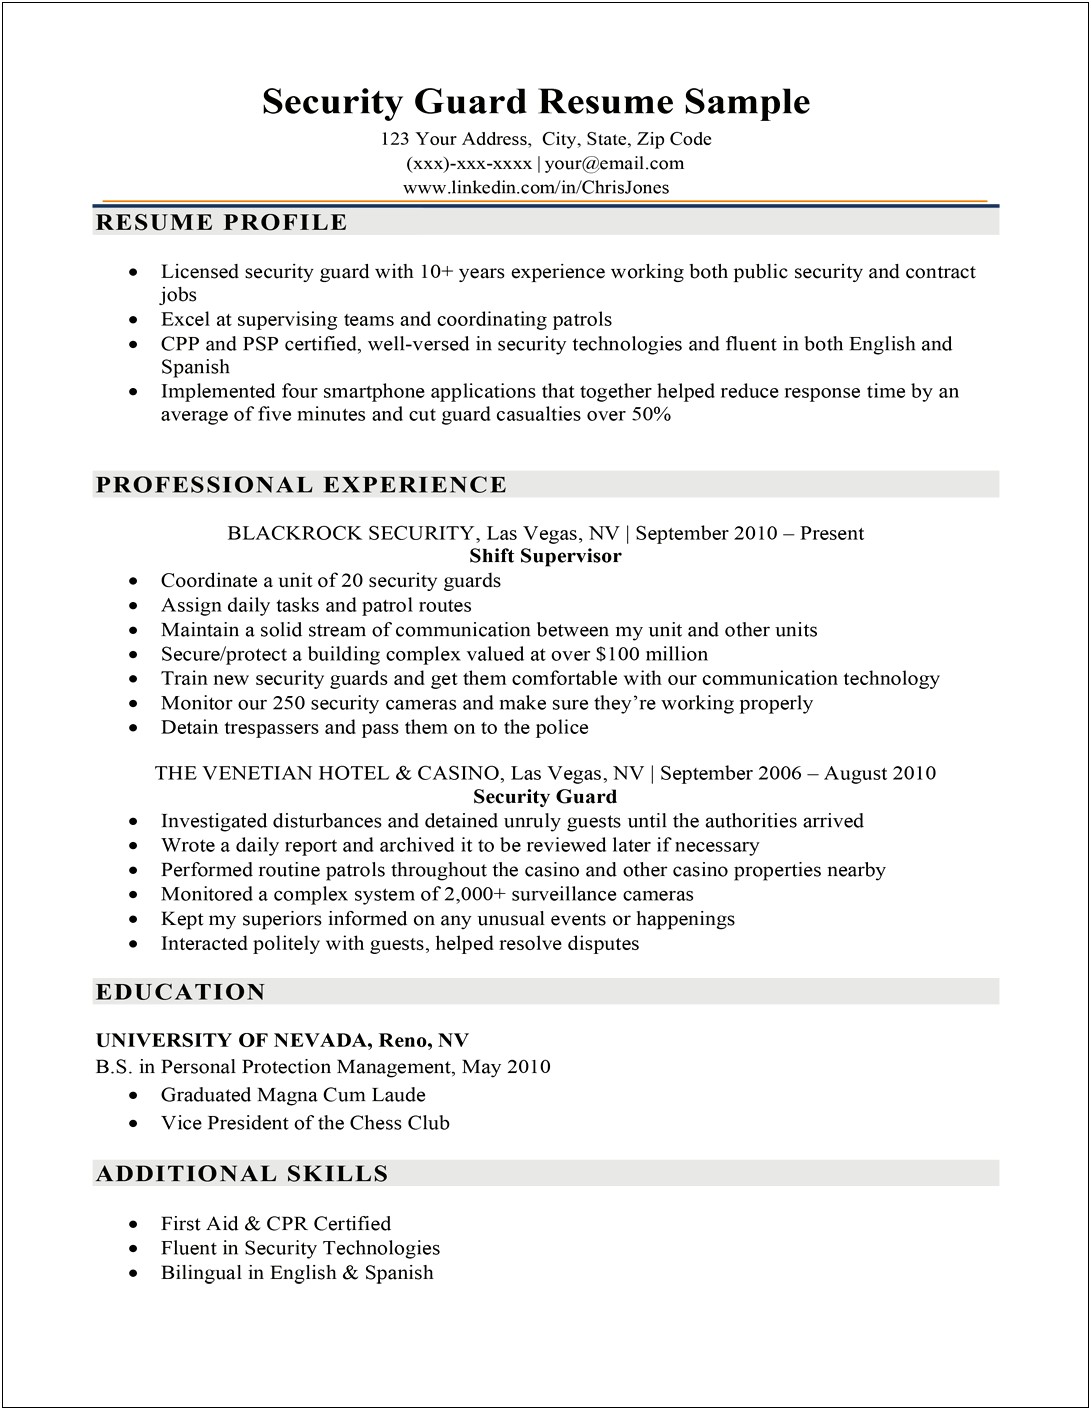 Job Description For Lifeguard For Resume